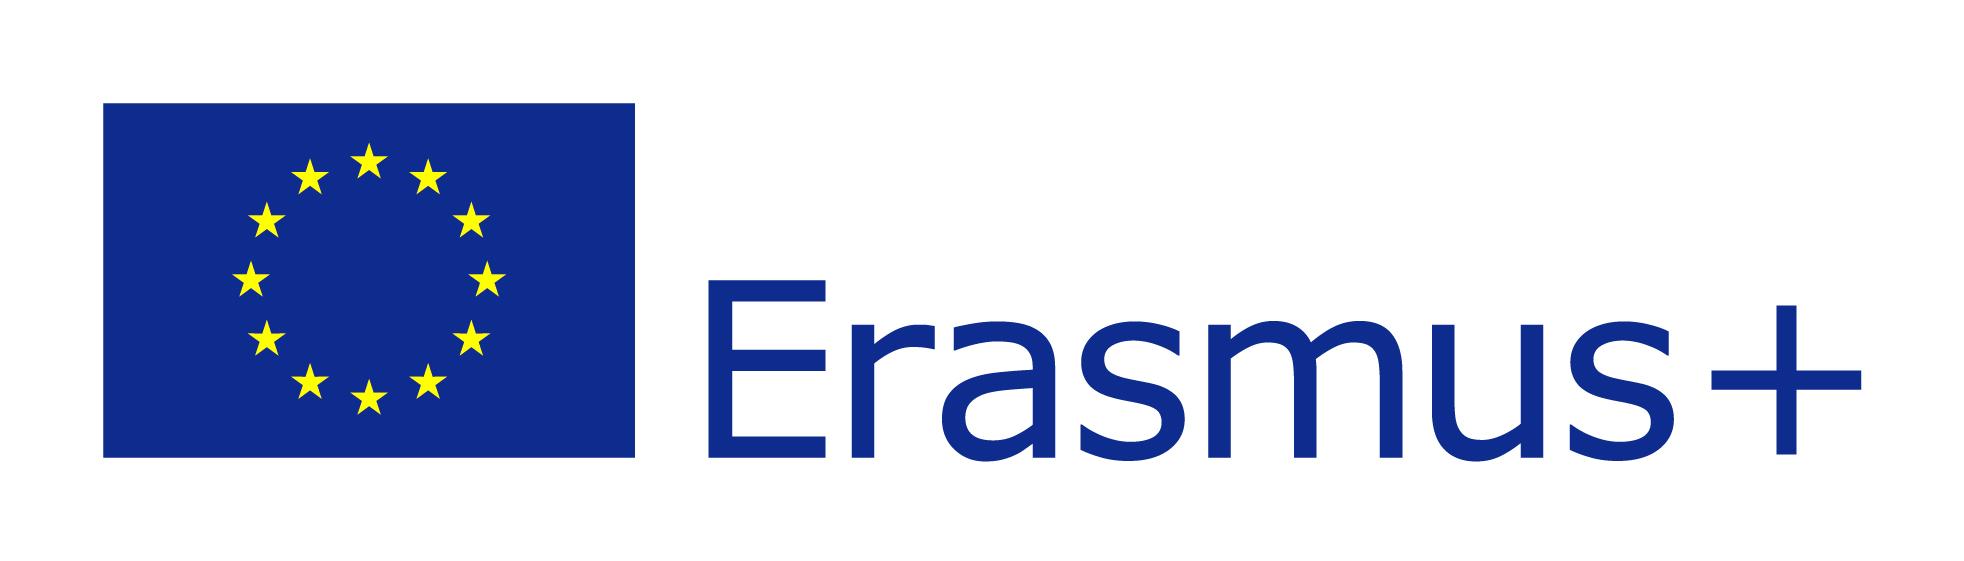 EU-lippu ja Erasmus+ -logo.